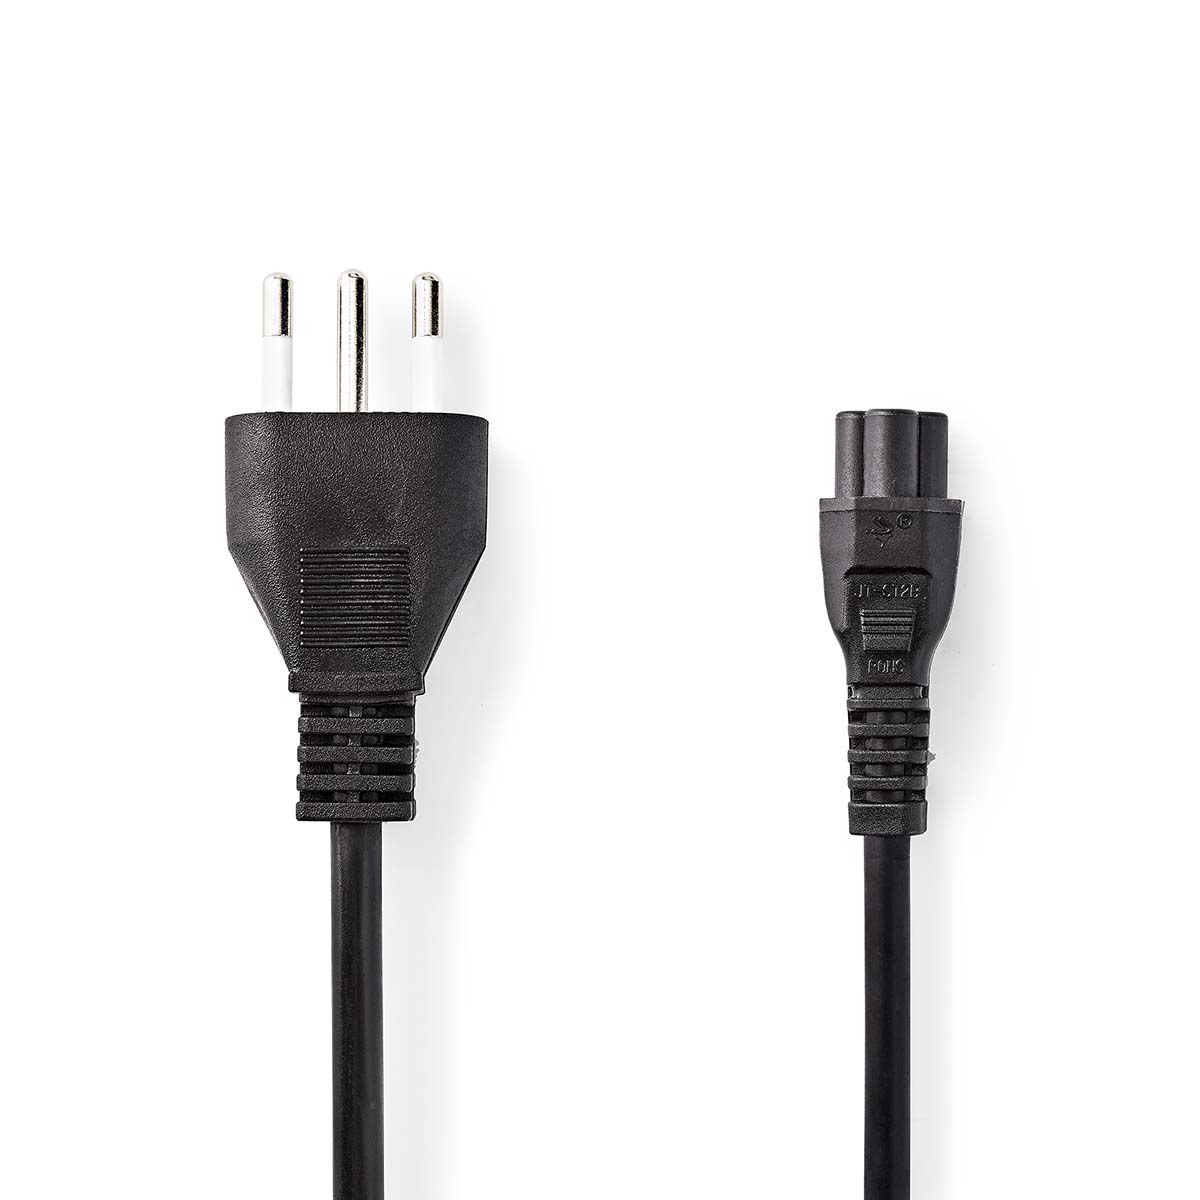 Nedis napájecí kabel zástrčka typ L (Itálie) - IEC320-C5 mickey mouse černá, 2 m (CEGL11320BK20)